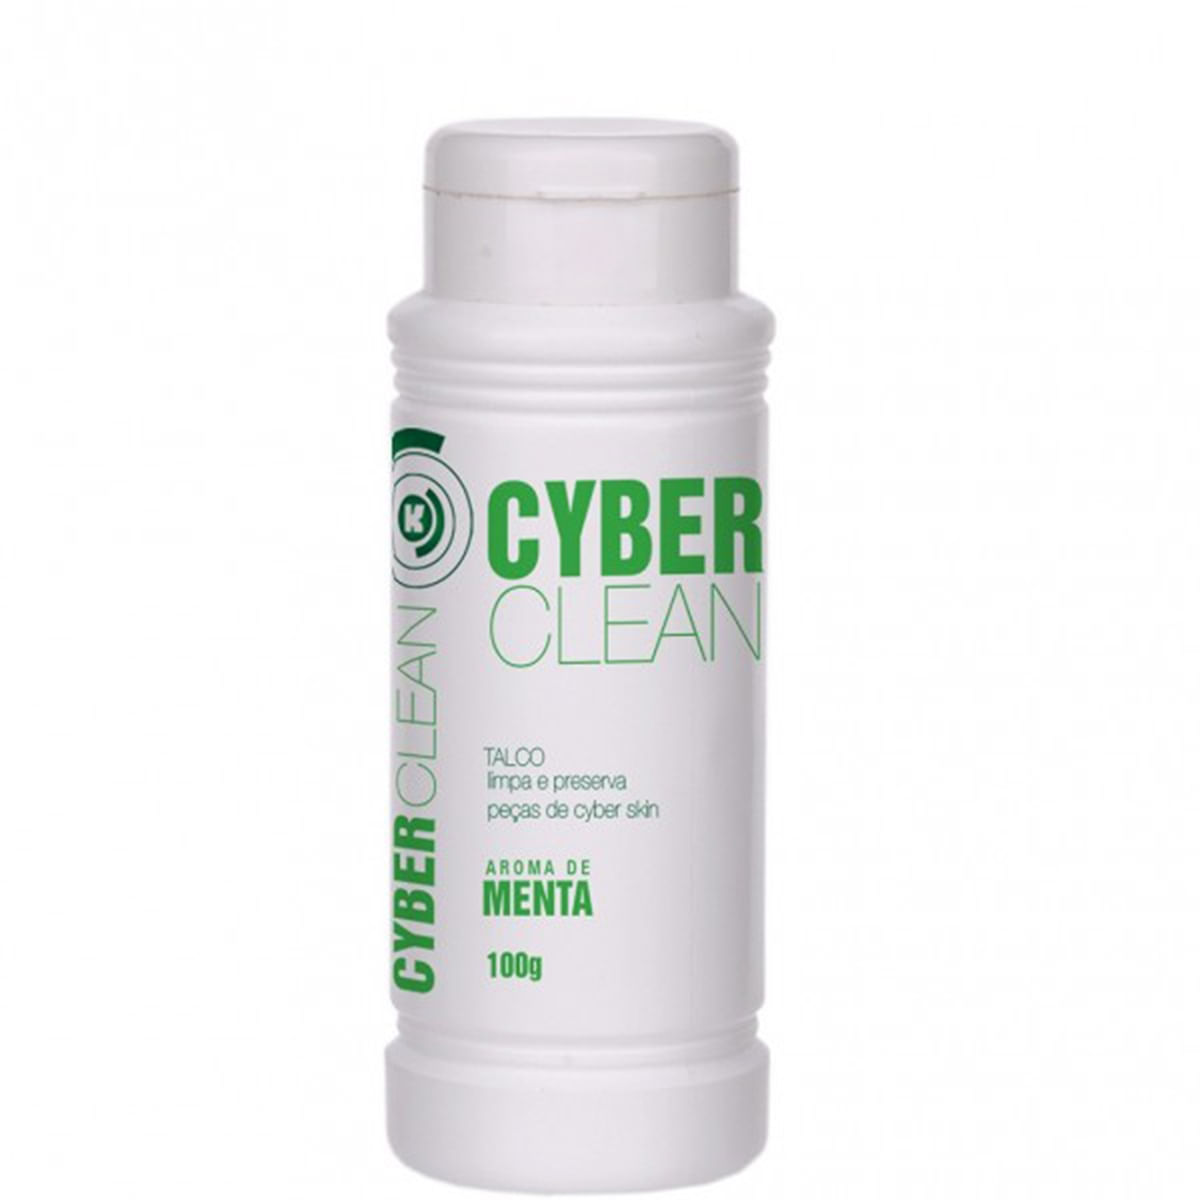 Talco Cyber Clean Limpa e Preserva Peças de Cyber Skin Aroma de Menta